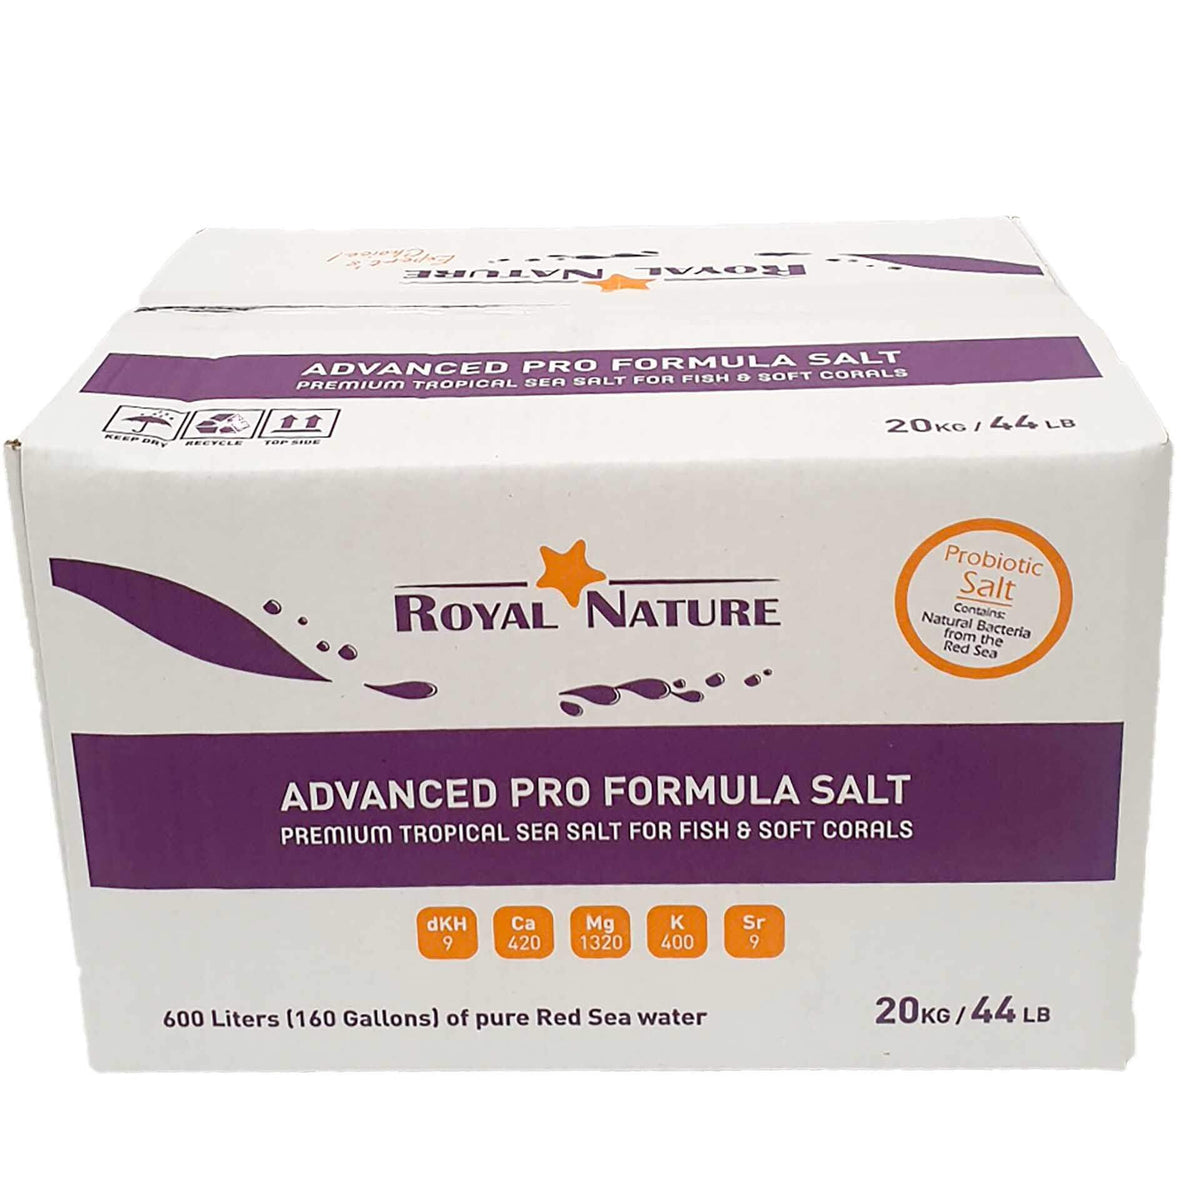 Royal Nature Advanced Pro Formula Probiotic Sea Salt 20kg box